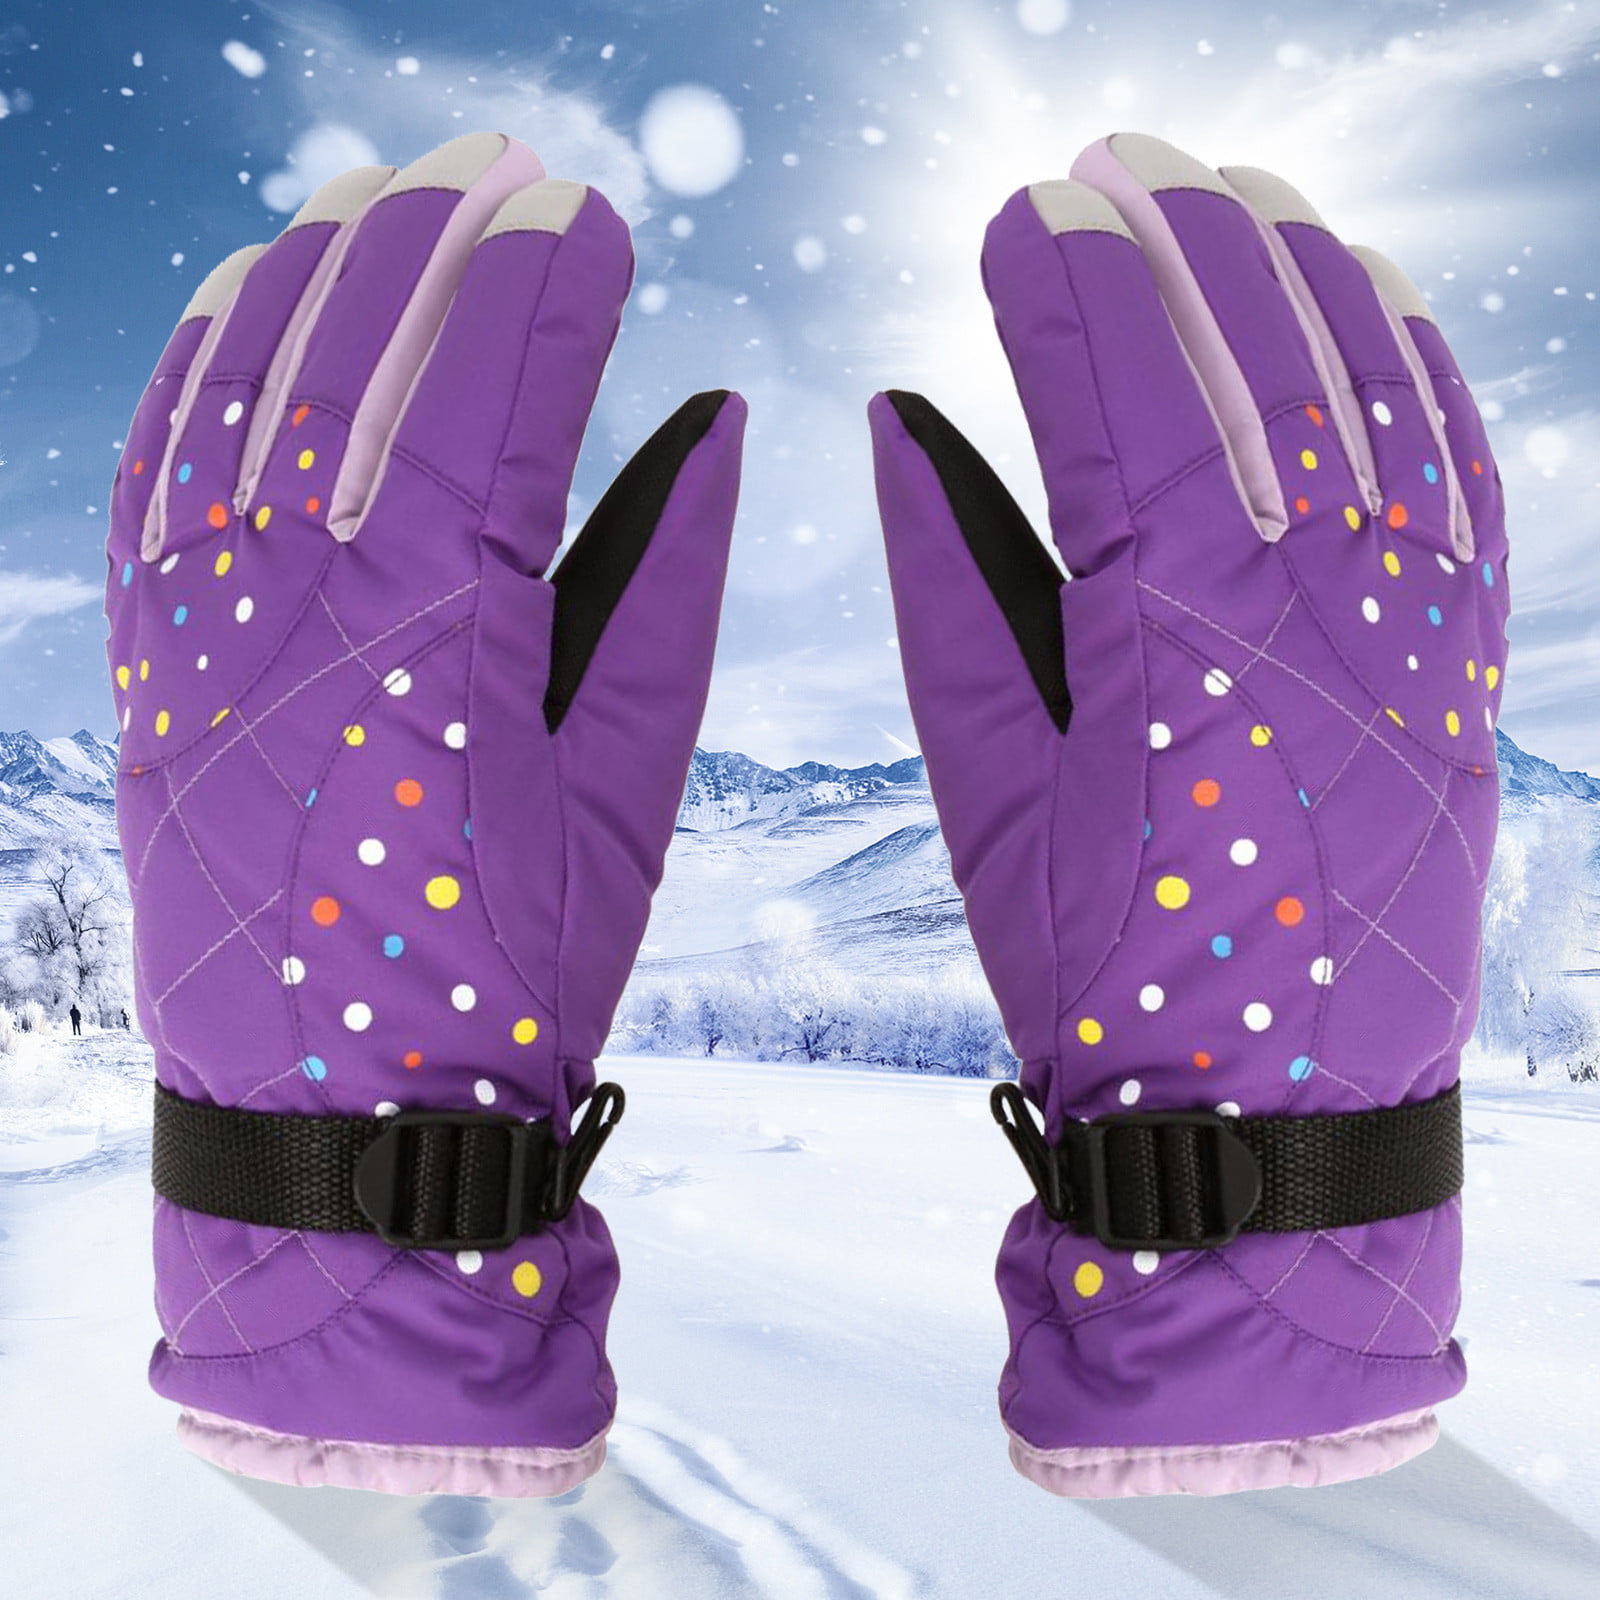 ANDORRA Women's Night Galaxy Waterproof Touchscreen Snow Gloves PURPLE SMALL 